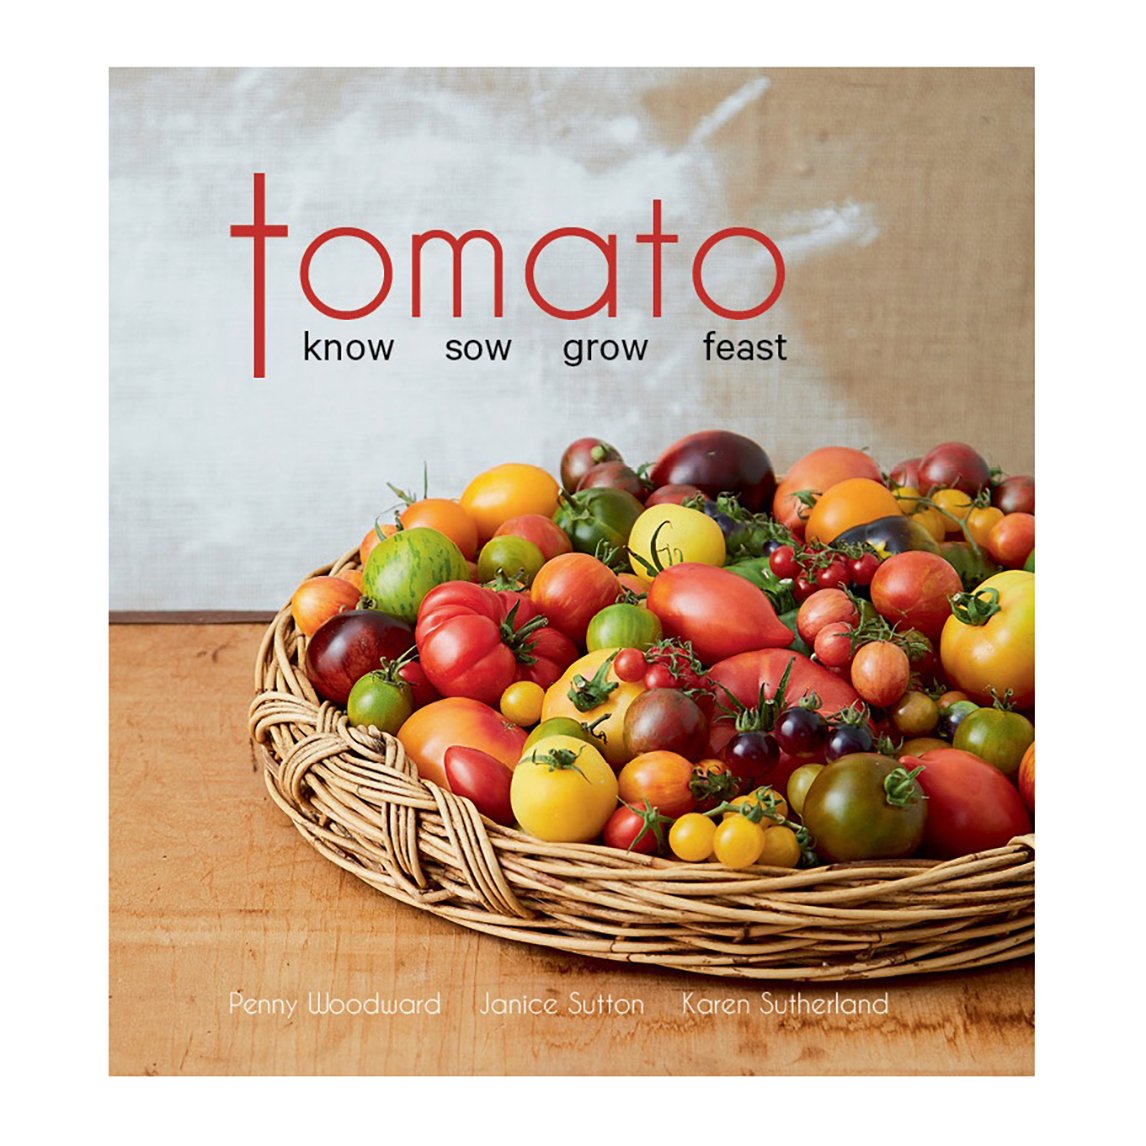 Tomato - Know, Sow, Grow, Feast